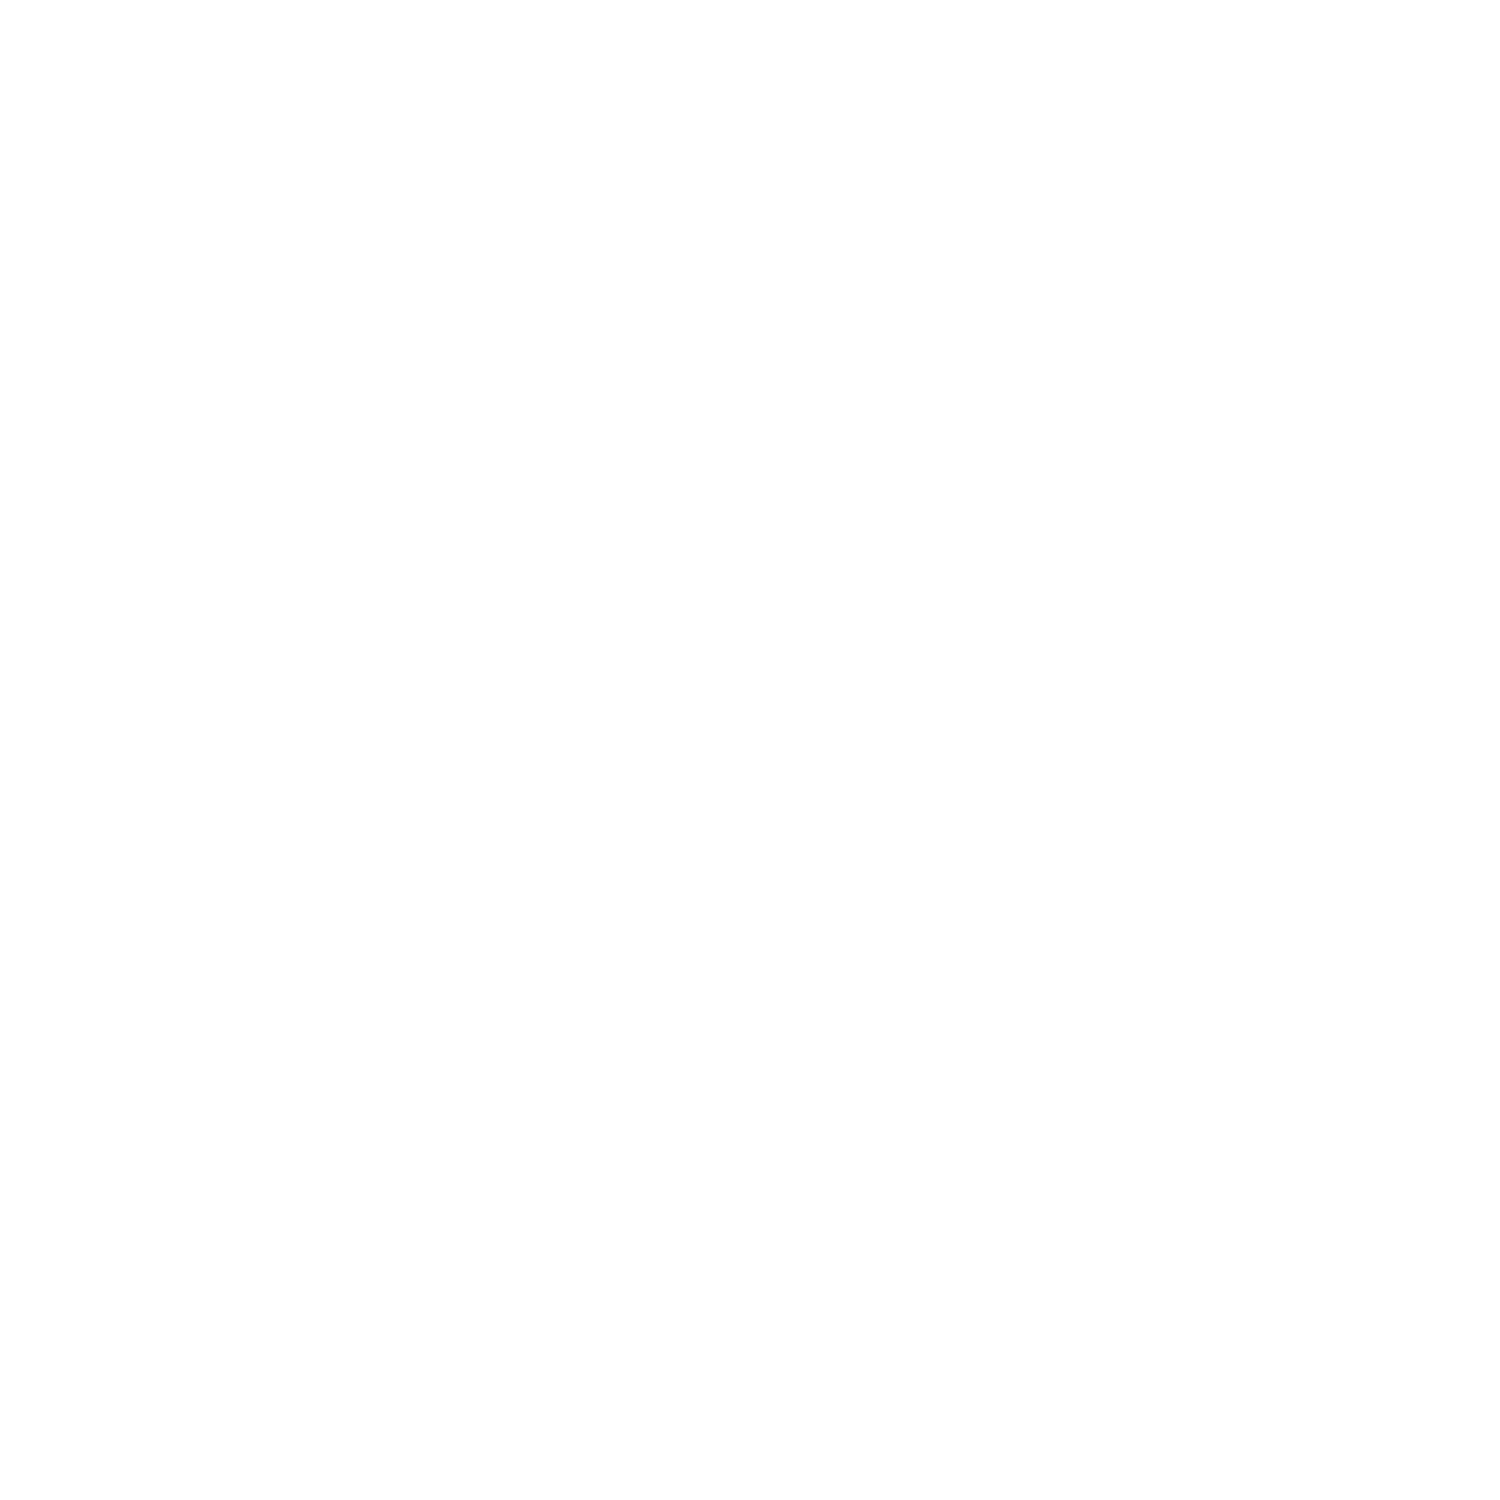 978 Group